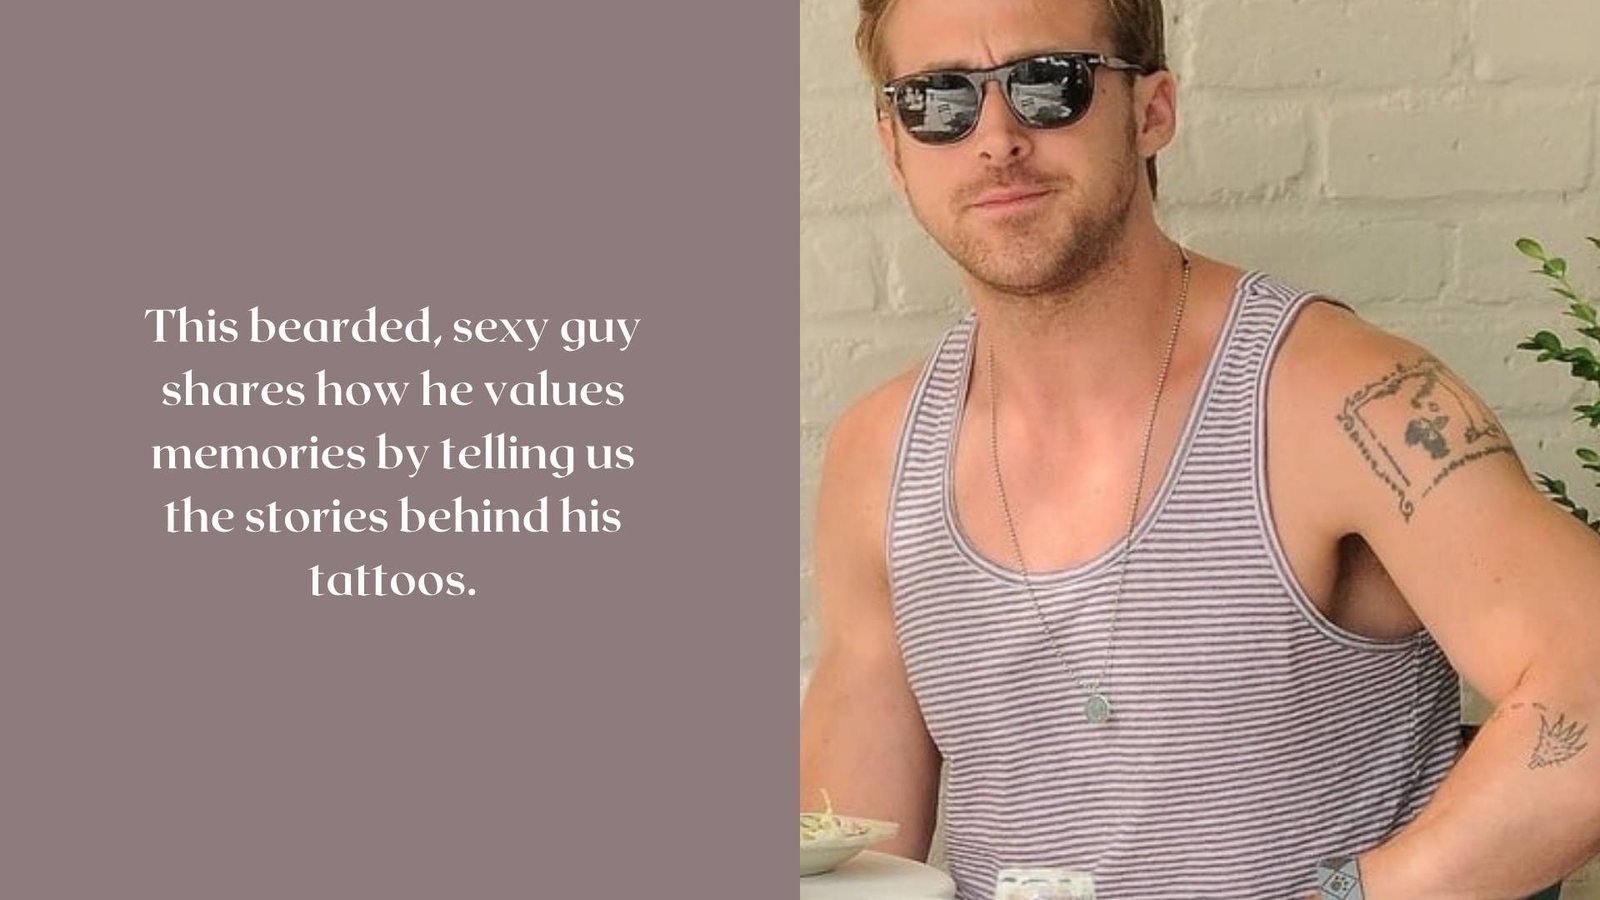 Ryan Gosling’s Tattoos & Their Meanings